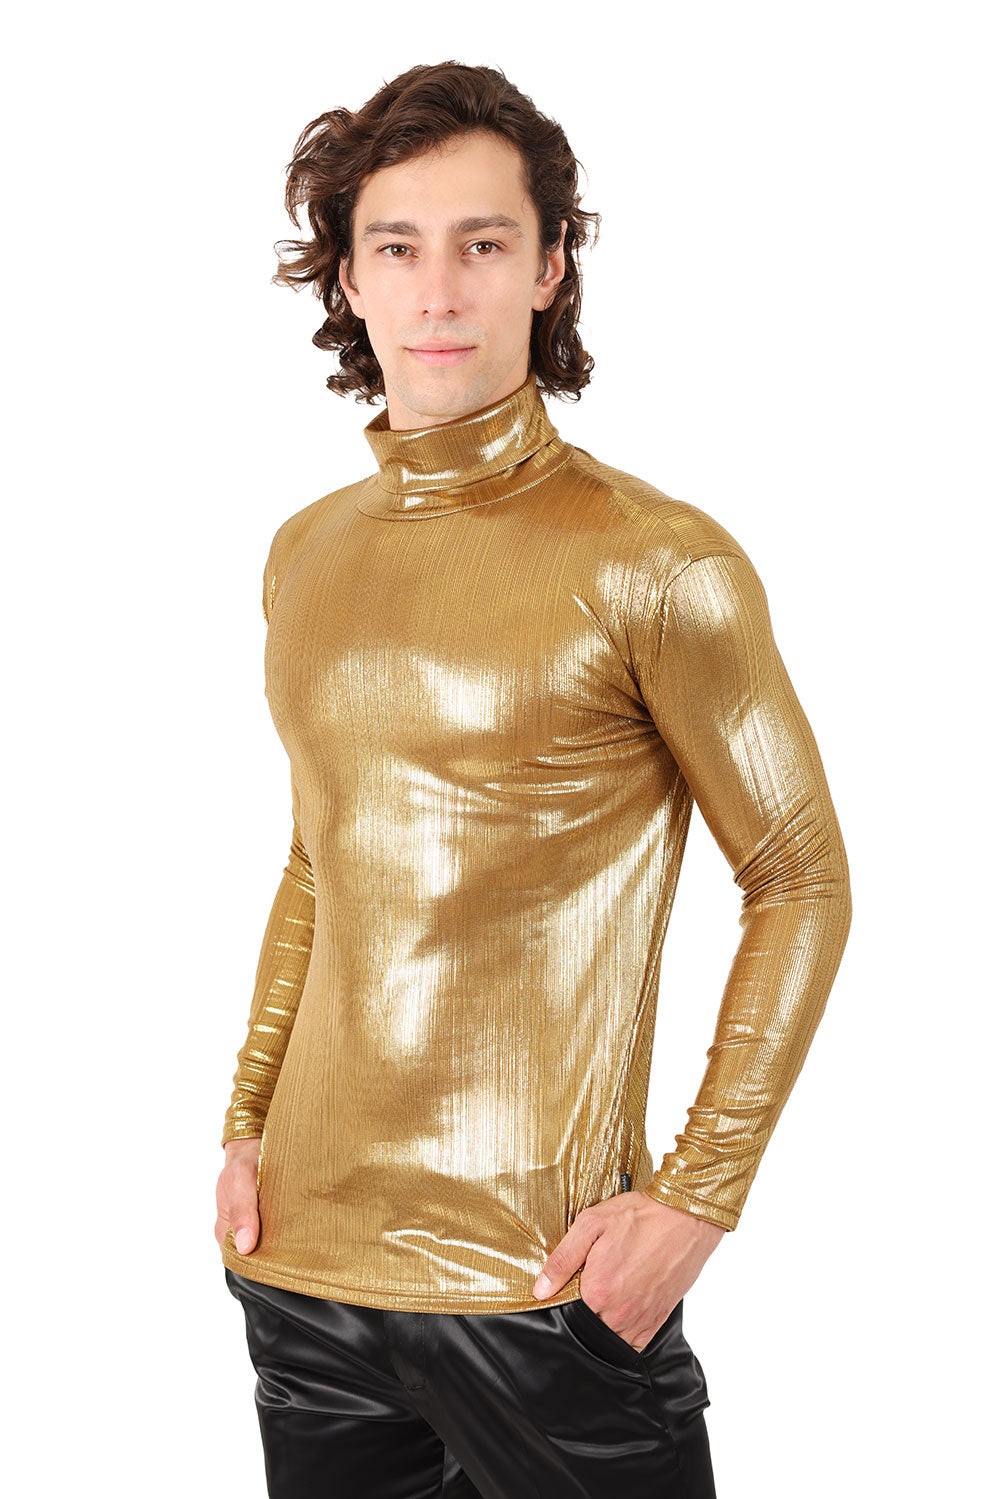 Barabas Wholesale Men's Metallic Luxury Long Sleeve Sweater 2KT1000 Light Gold